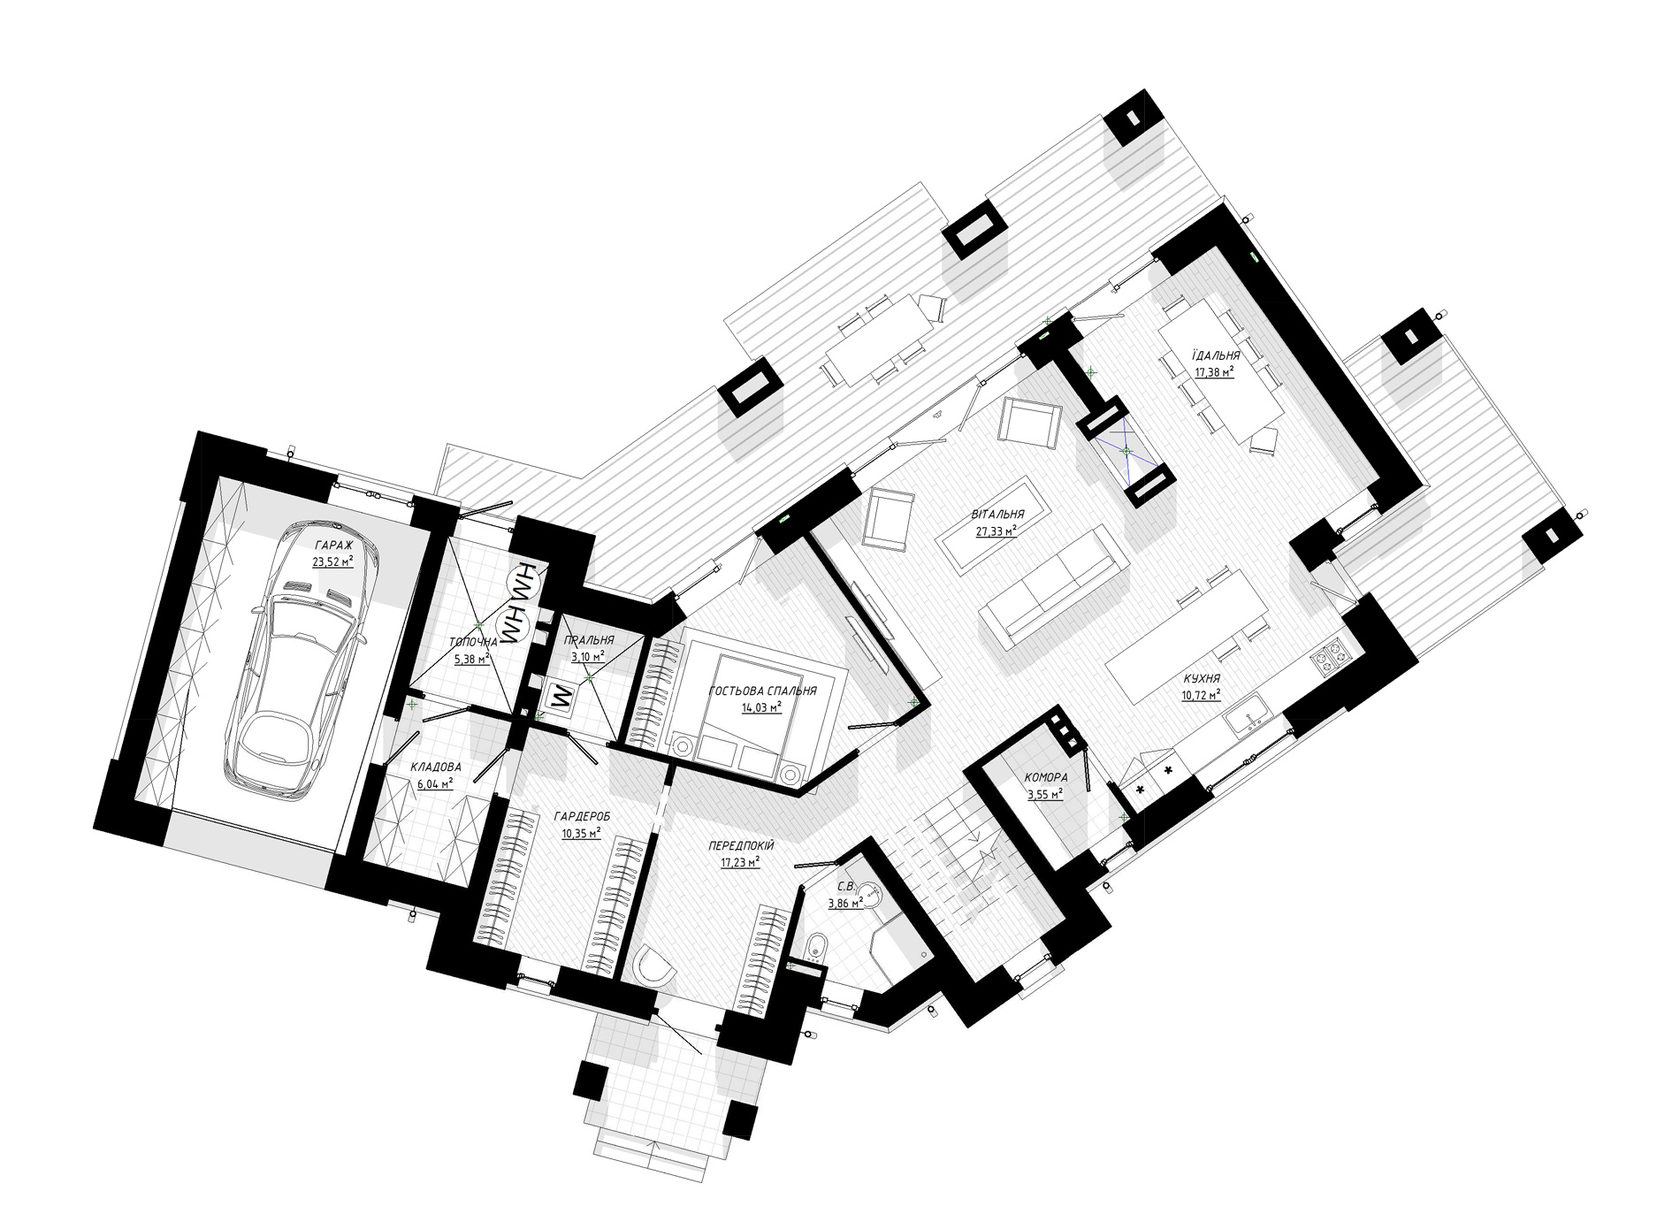 План первого этажа частного дома